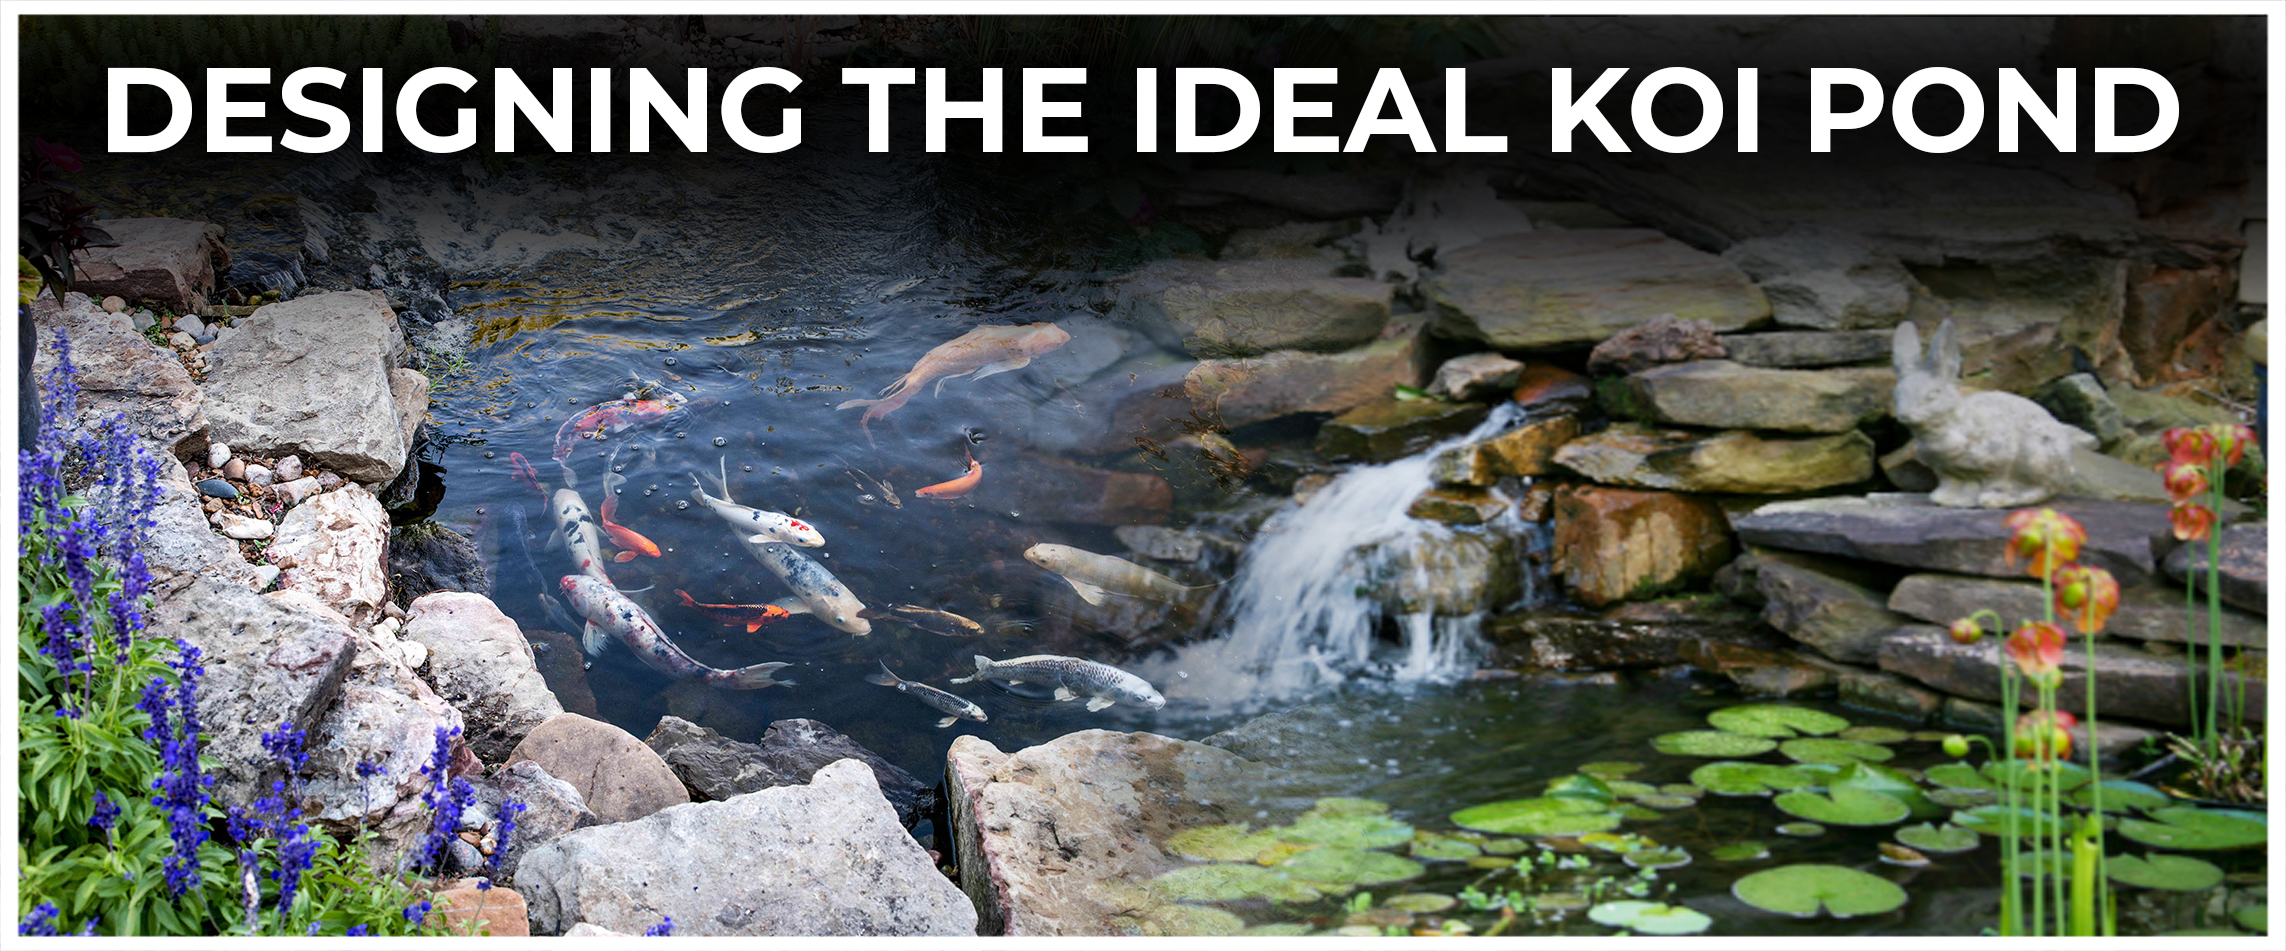 Designing the Ideal Koi Pond